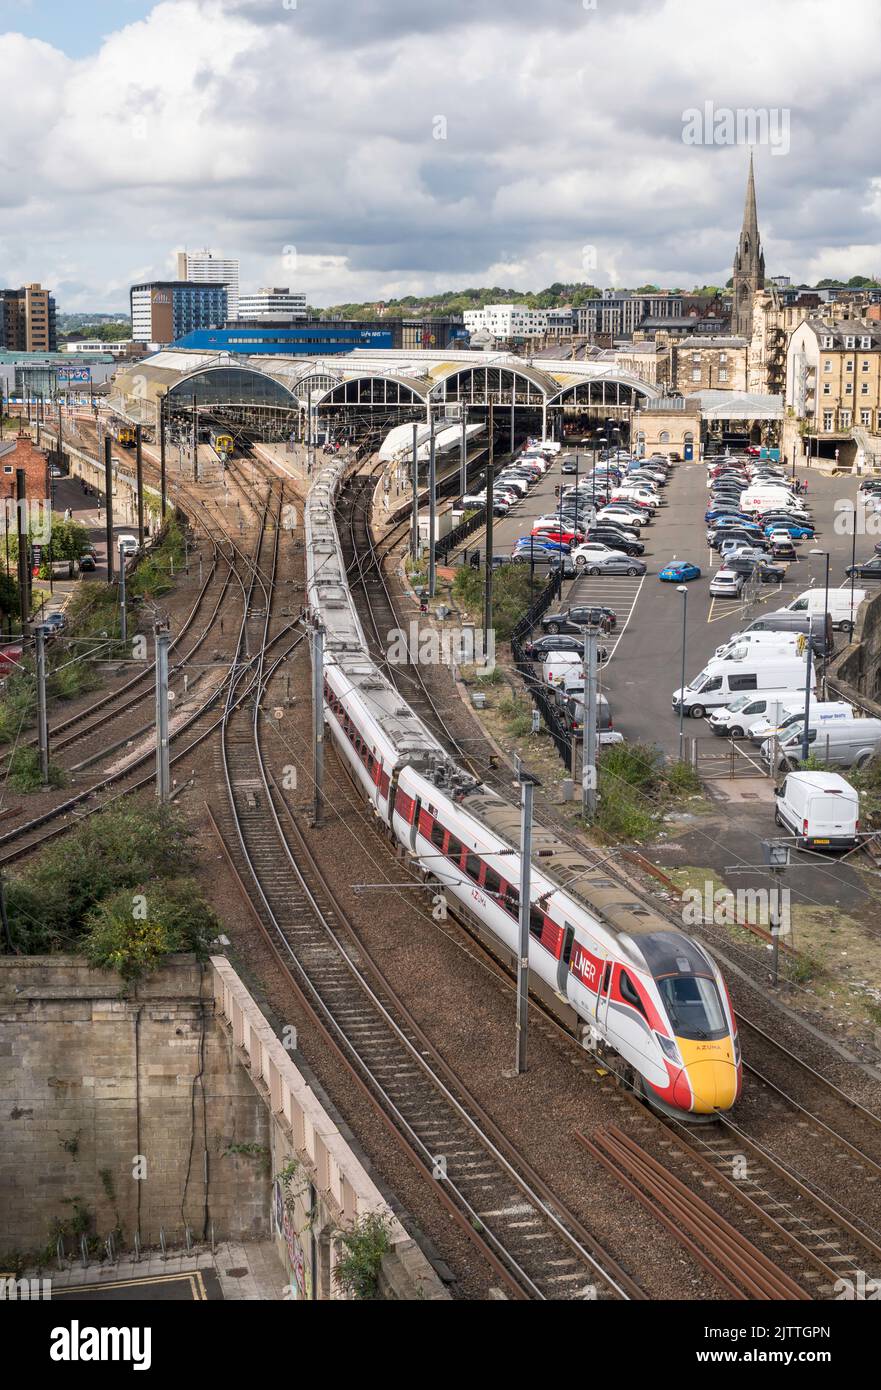 Un train express Azuma LNER quitte la gare centrale de Newcastle, Newcastle upon Tyne, Angleterre, Royaume-Uni Banque D'Images